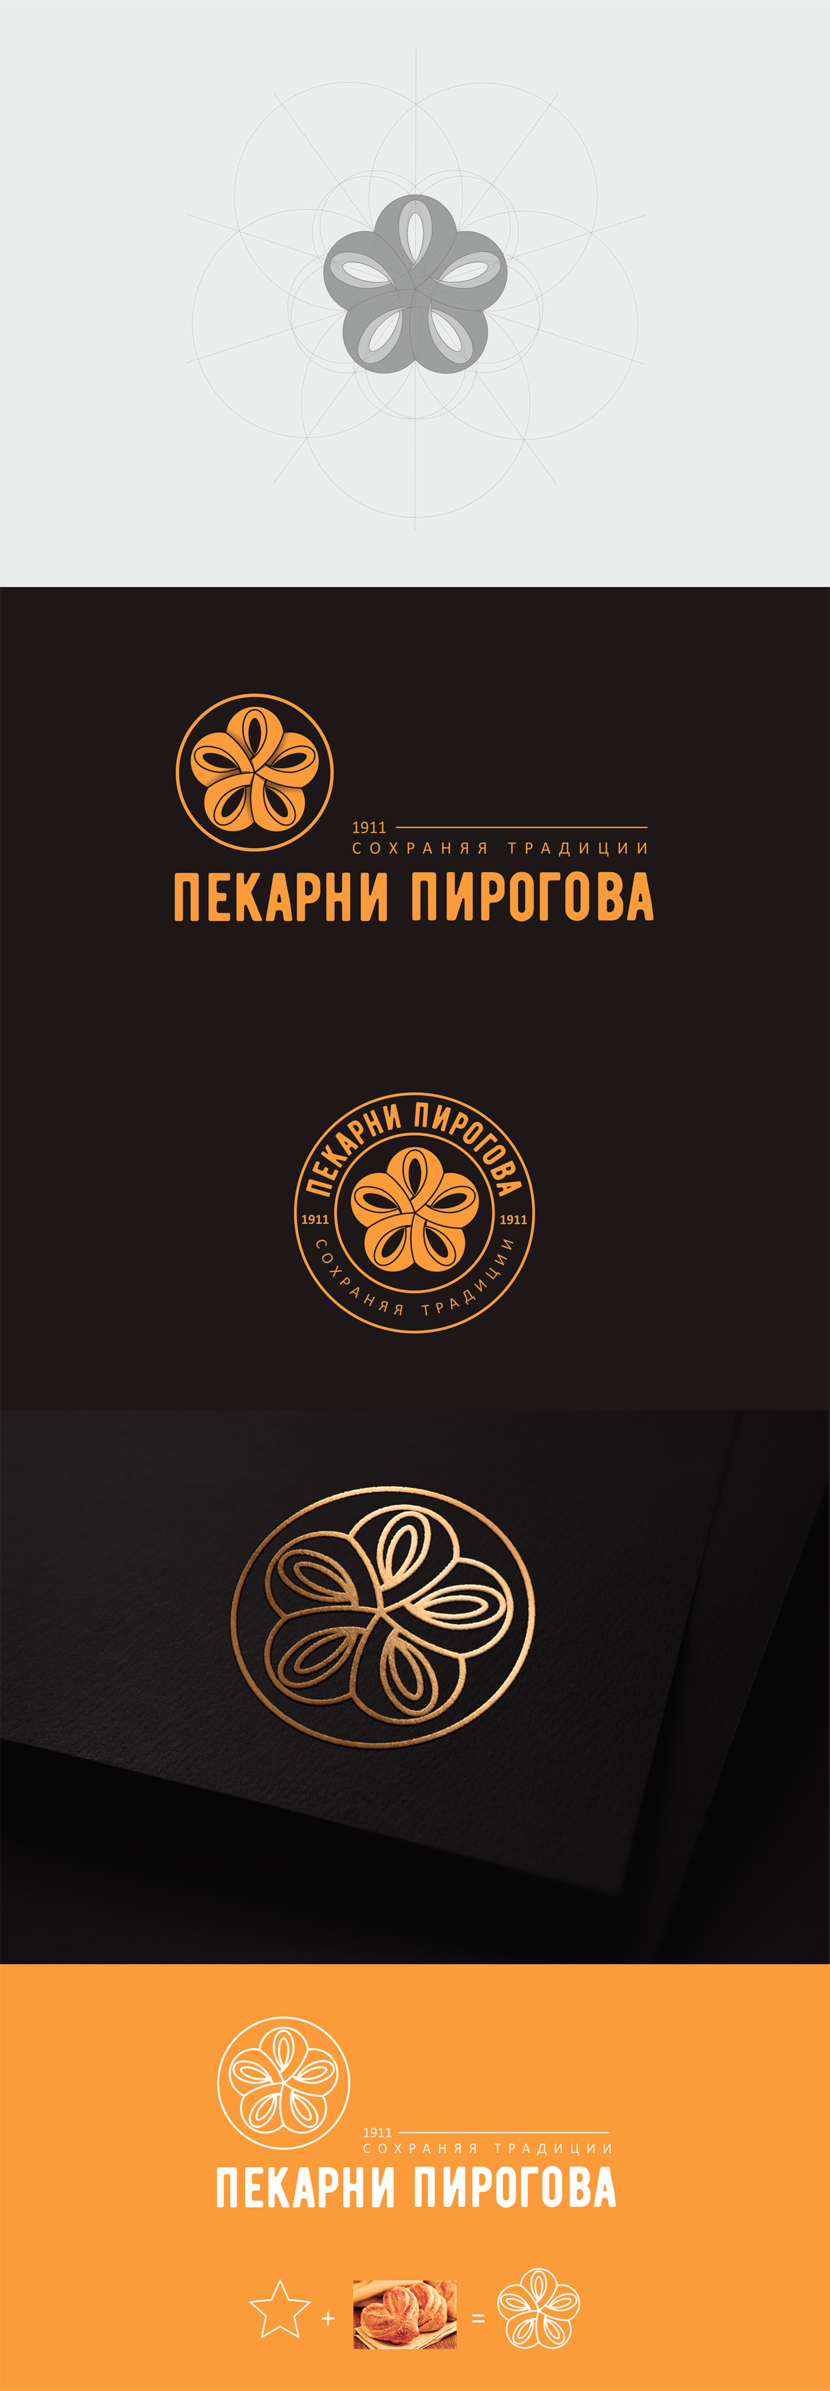 + - Создание логотипа перкарни